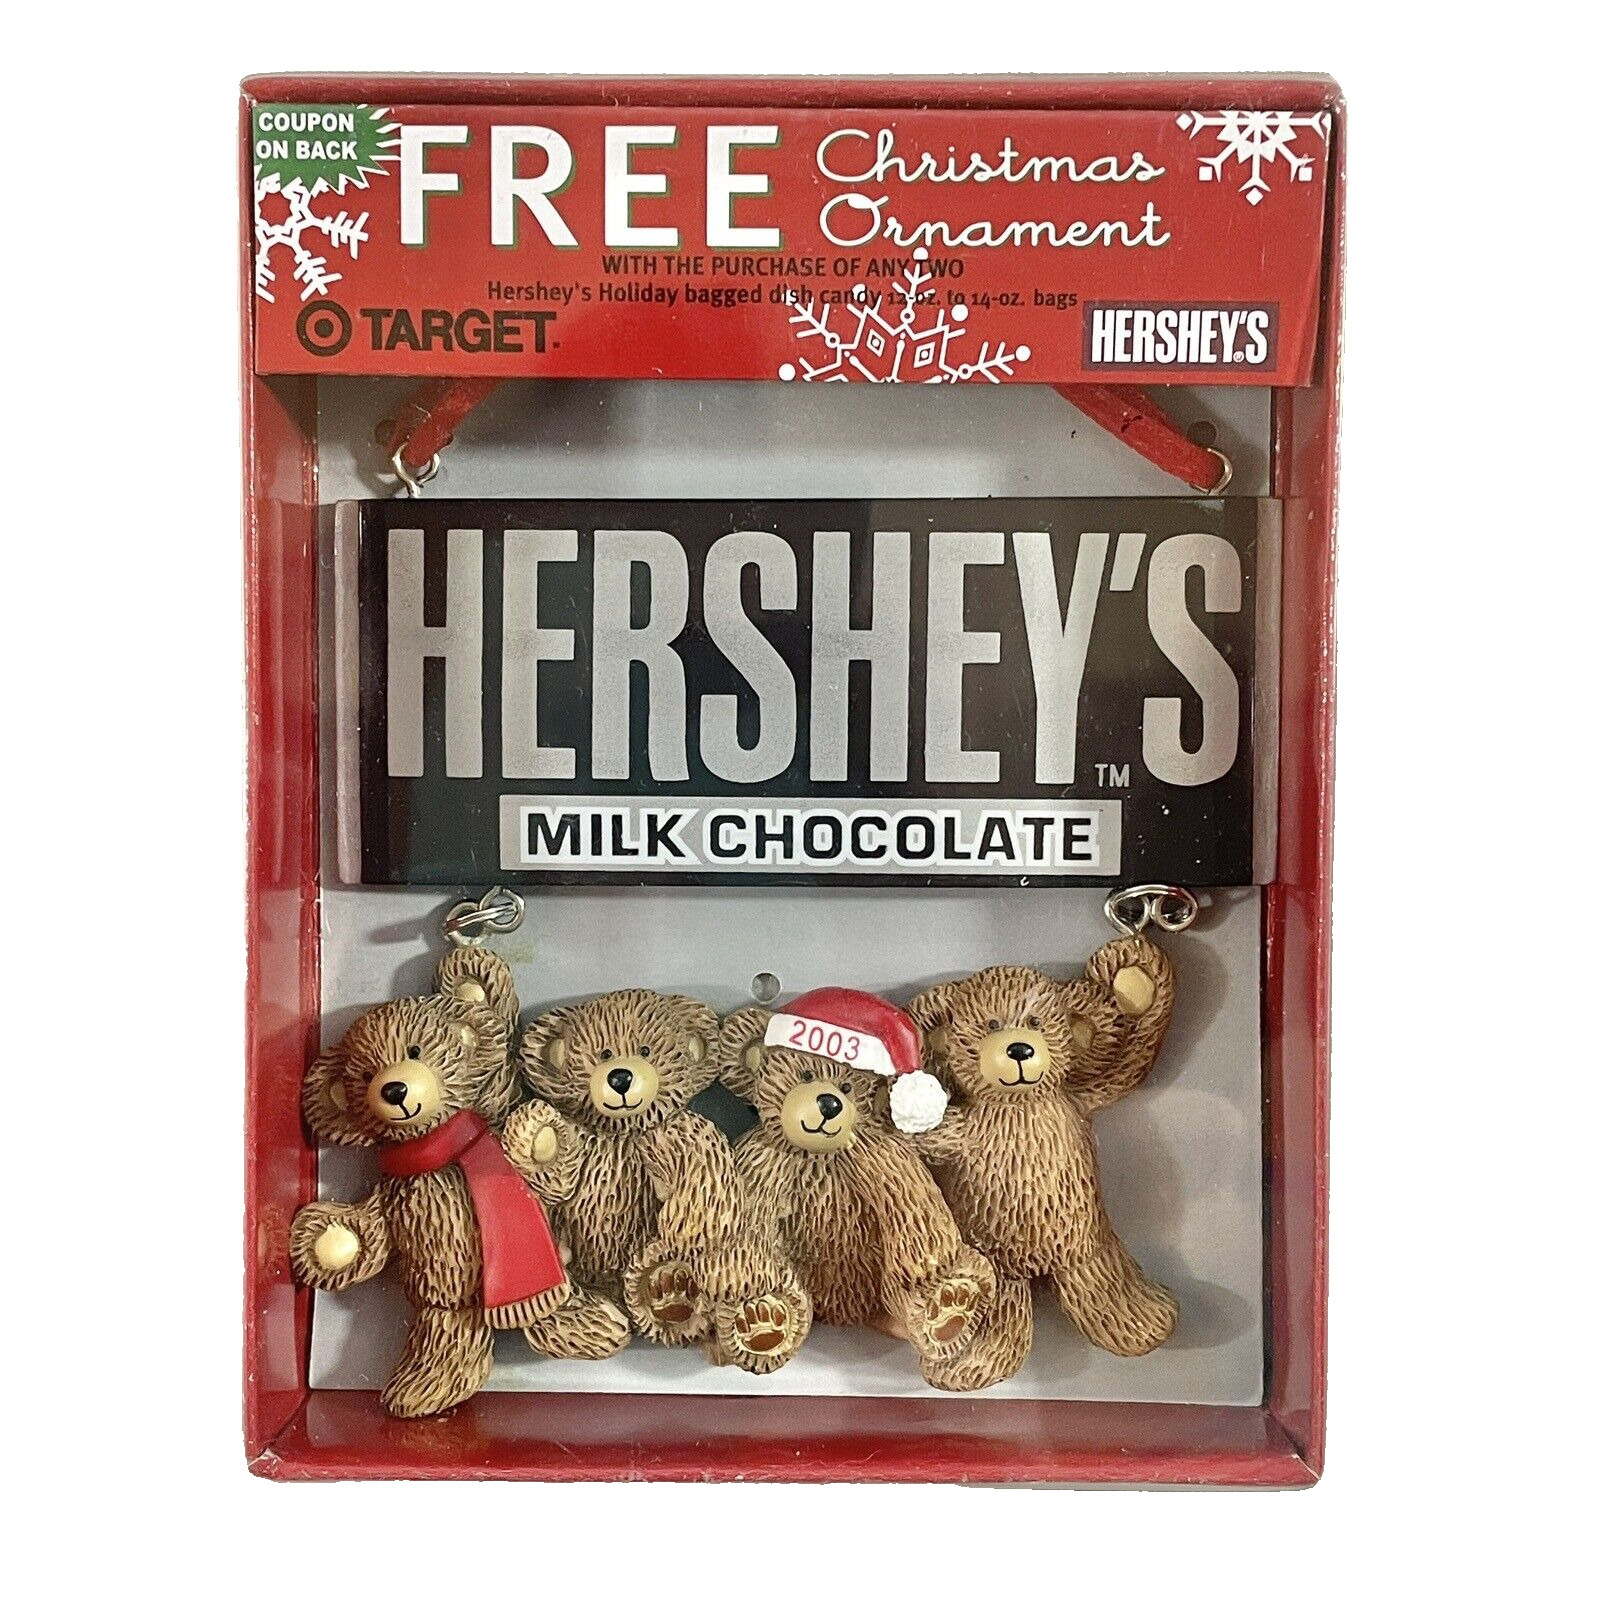 Hersheys Milk Chocolate Bar Christmas Ornament 2003 Teddy Bears Target Special